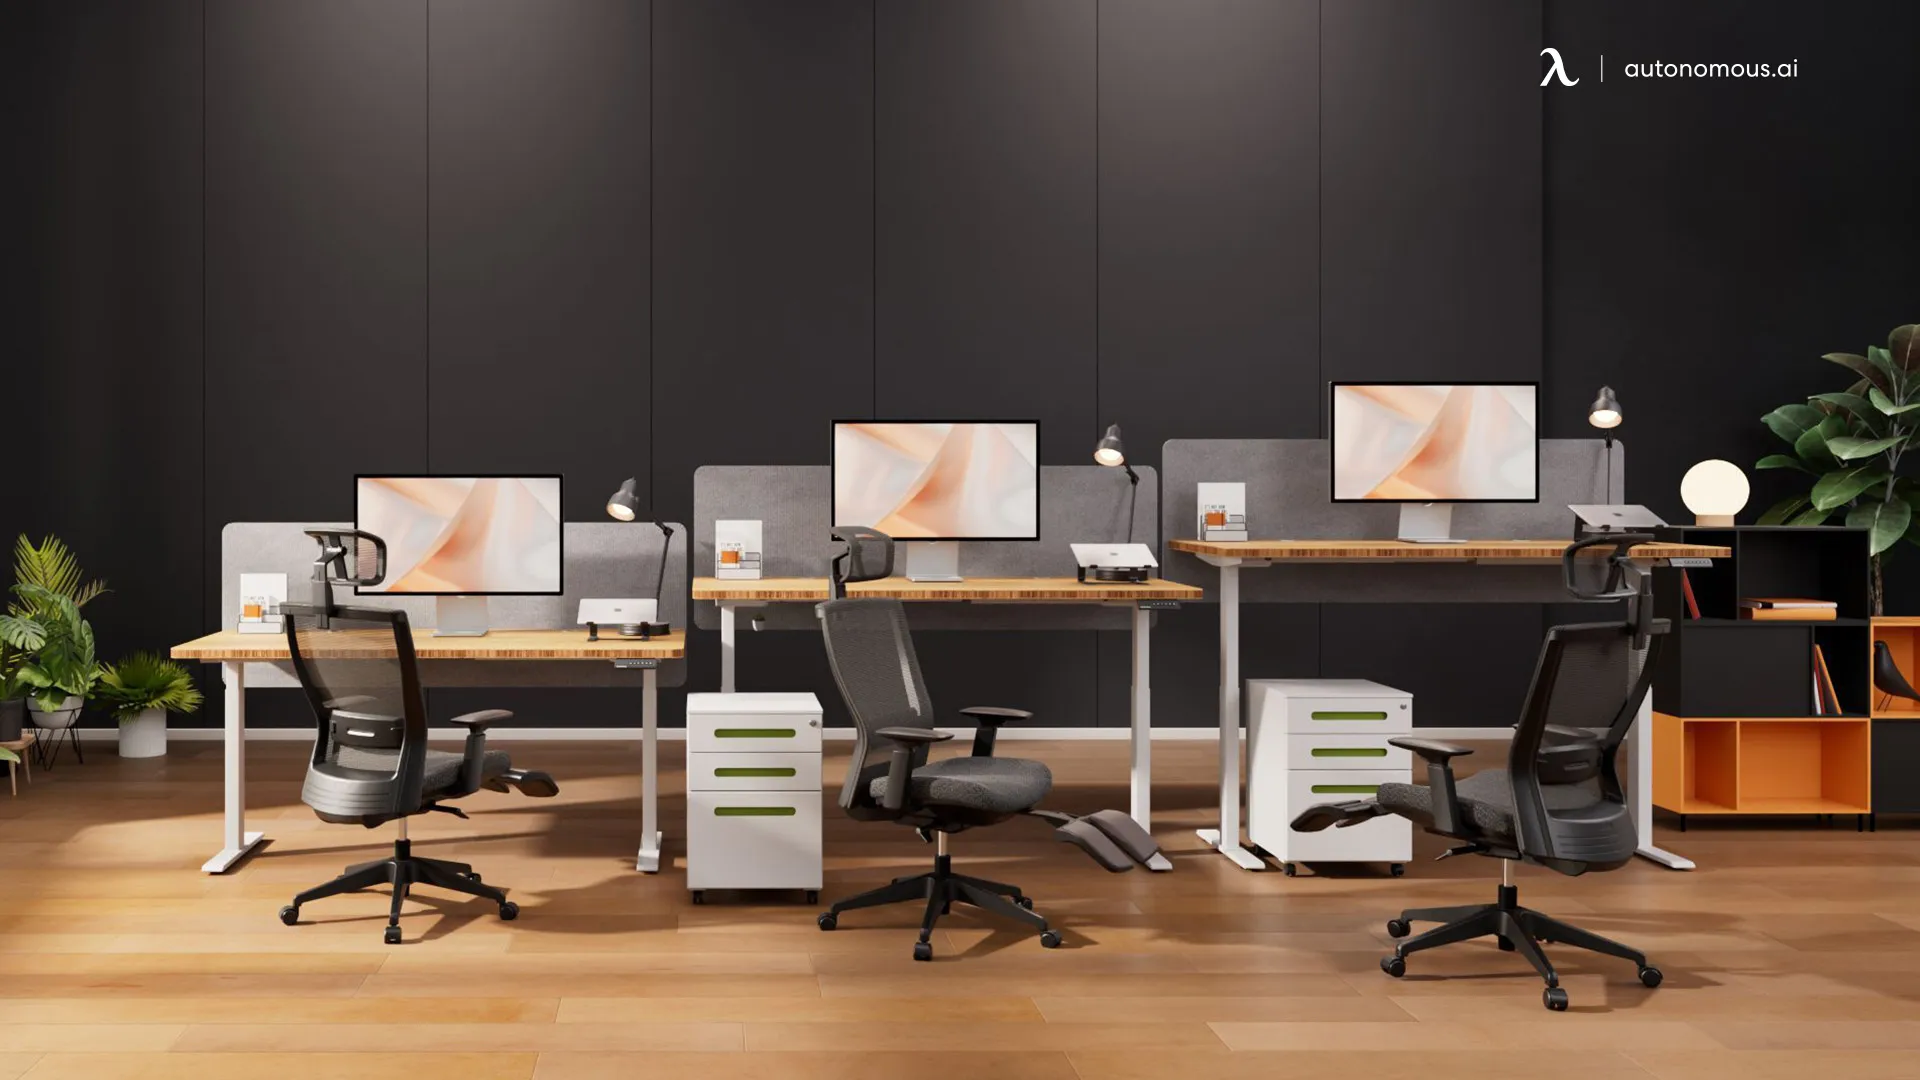 Autonomous Online Store - Office Furniture London Ontario